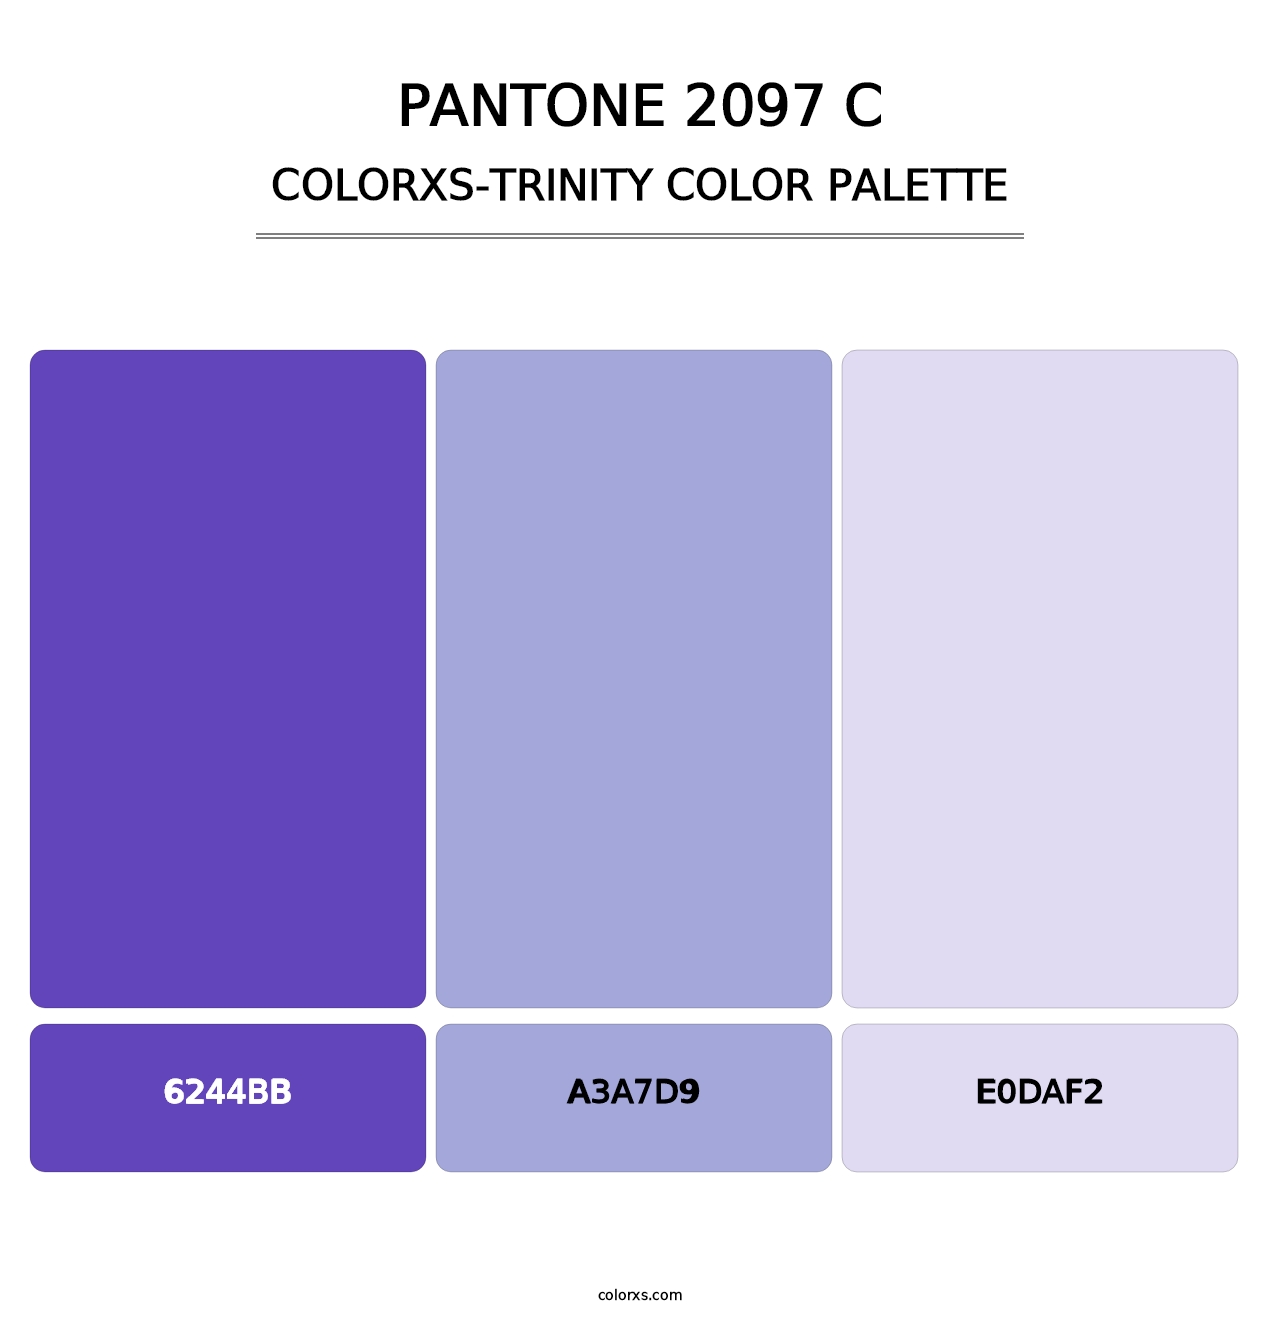 PANTONE 2097 C - Colorxs Trinity Palette